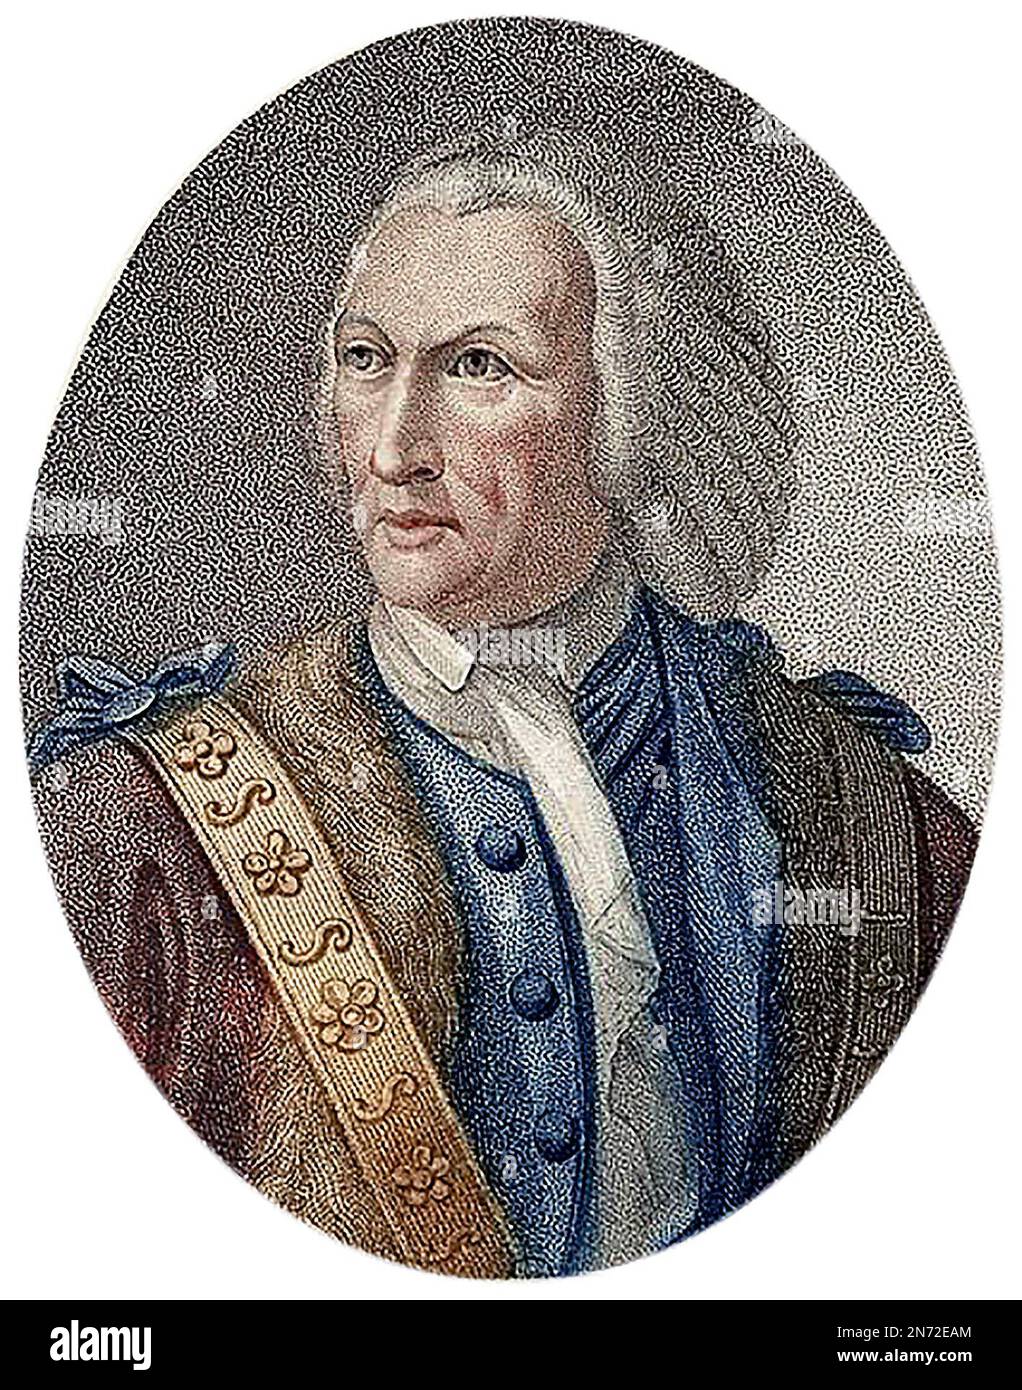 A cargo de William Beckford. Retrato de la figura política inglesa que fue dos veces alcalde de Londres, William Beckford (1709-1770) Foto de stock